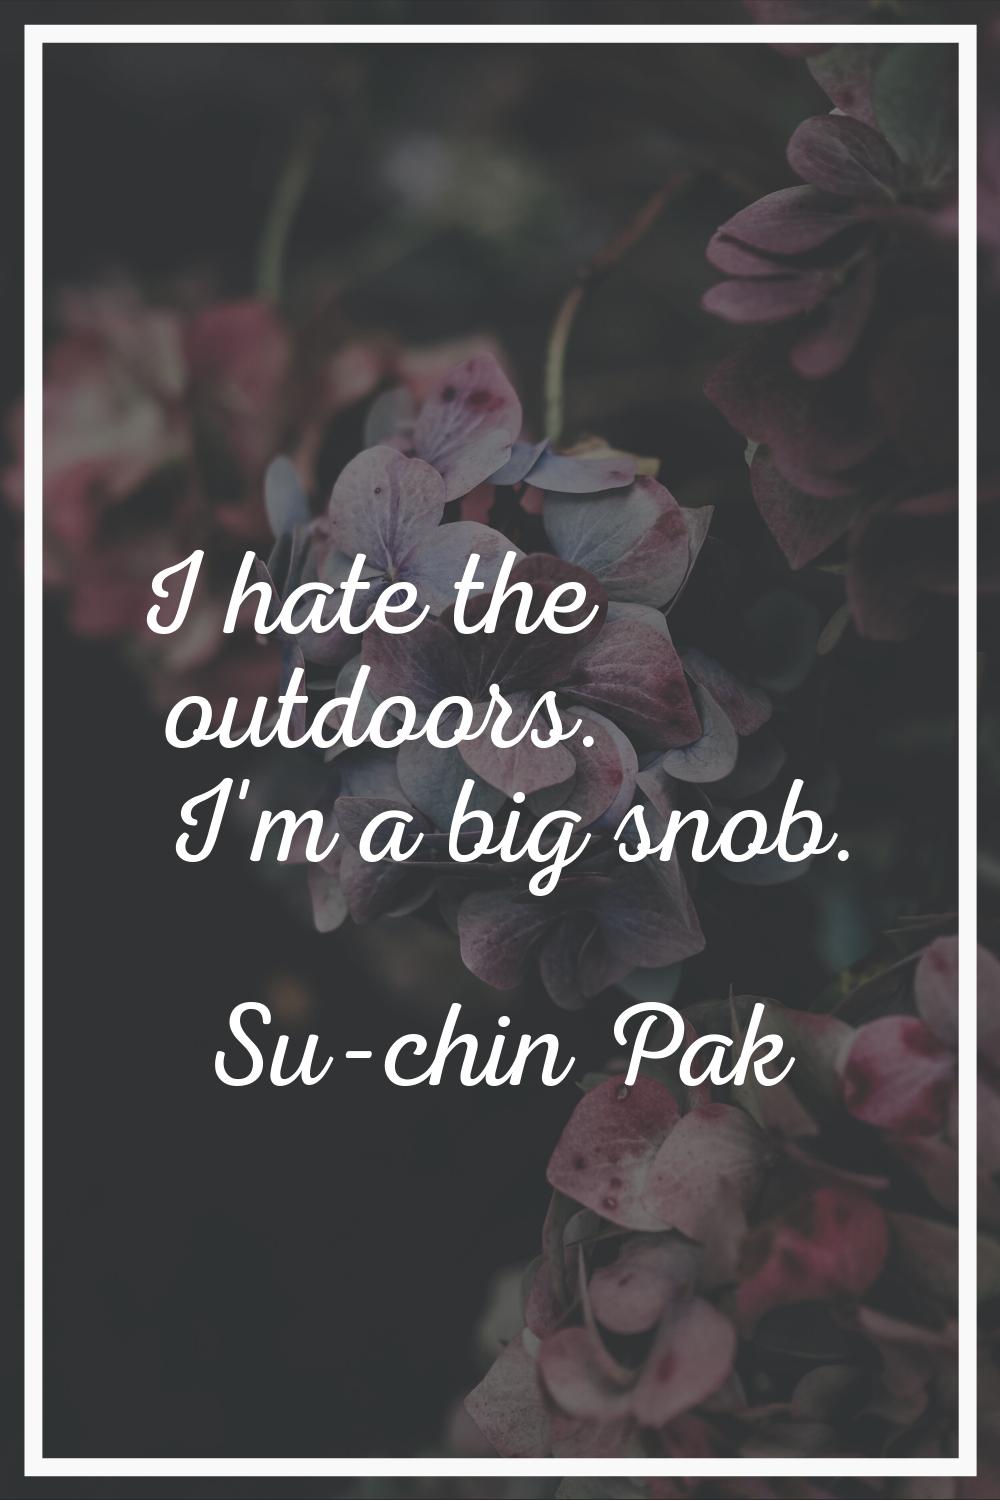 I hate the outdoors. I'm a big snob.